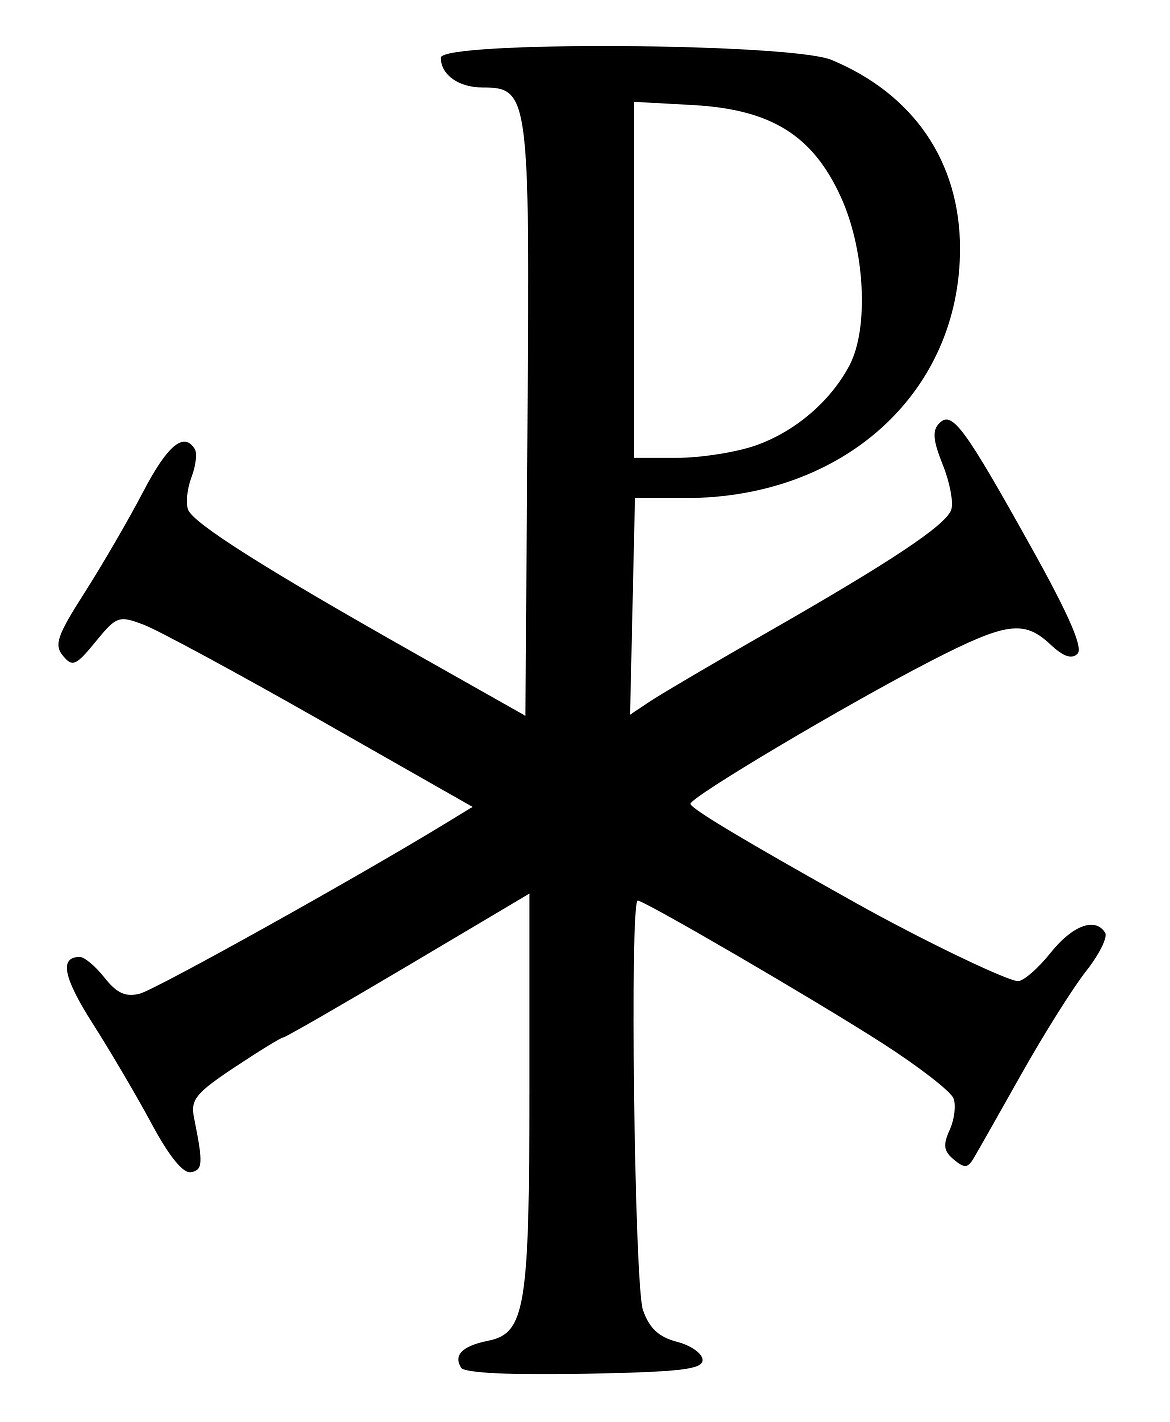 The Christian symbol.